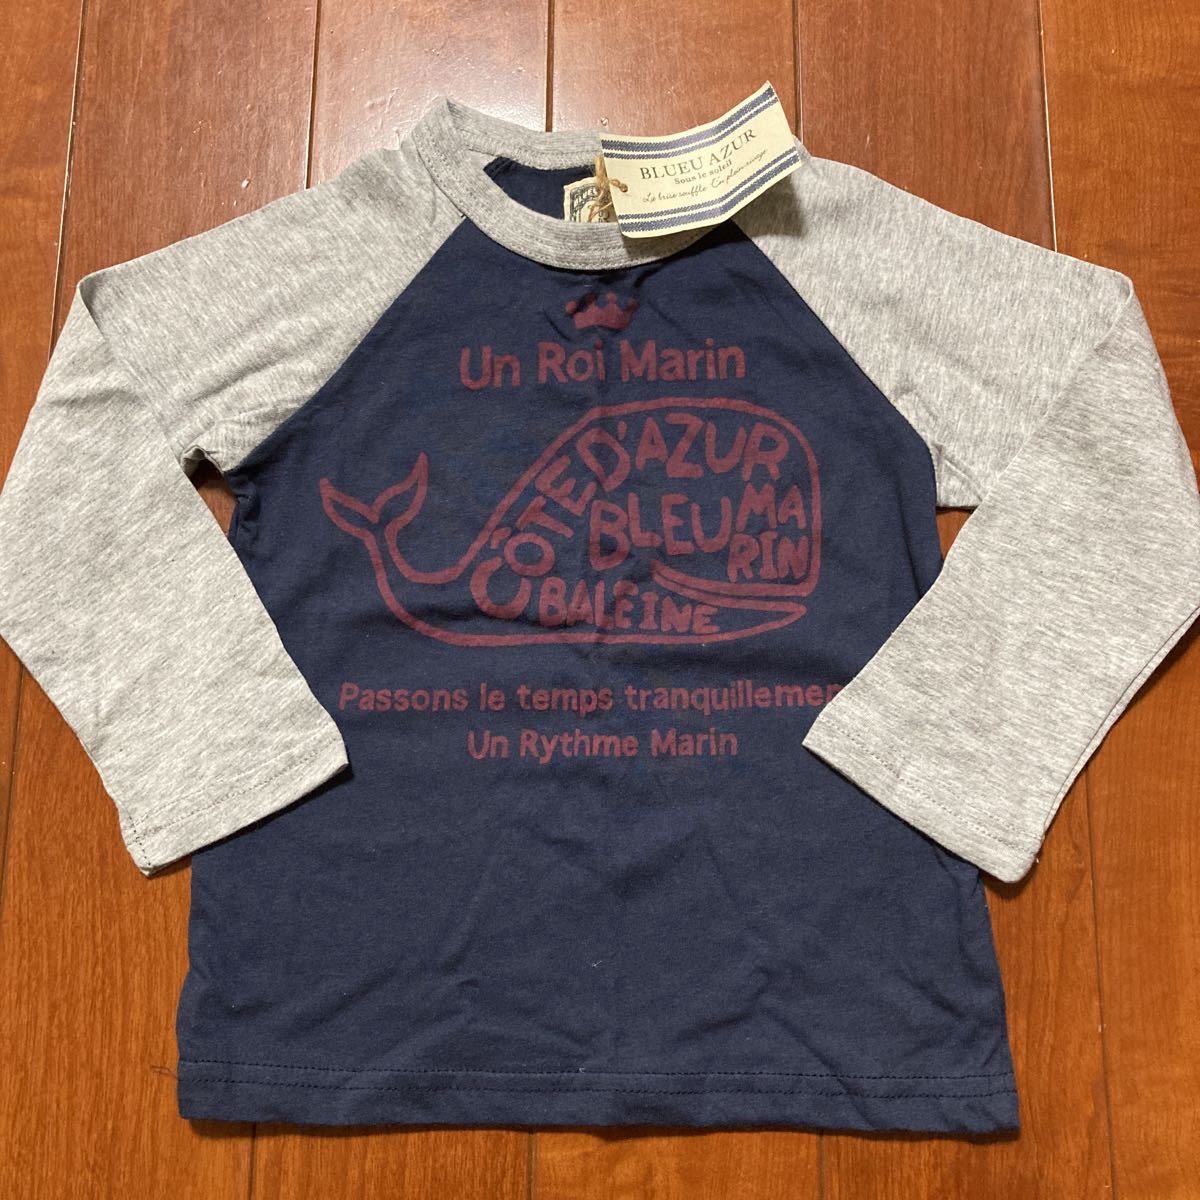 AZUR・ブルー アズール・長袖Tシャツ・ネイビー×グレー・100・定価3360円